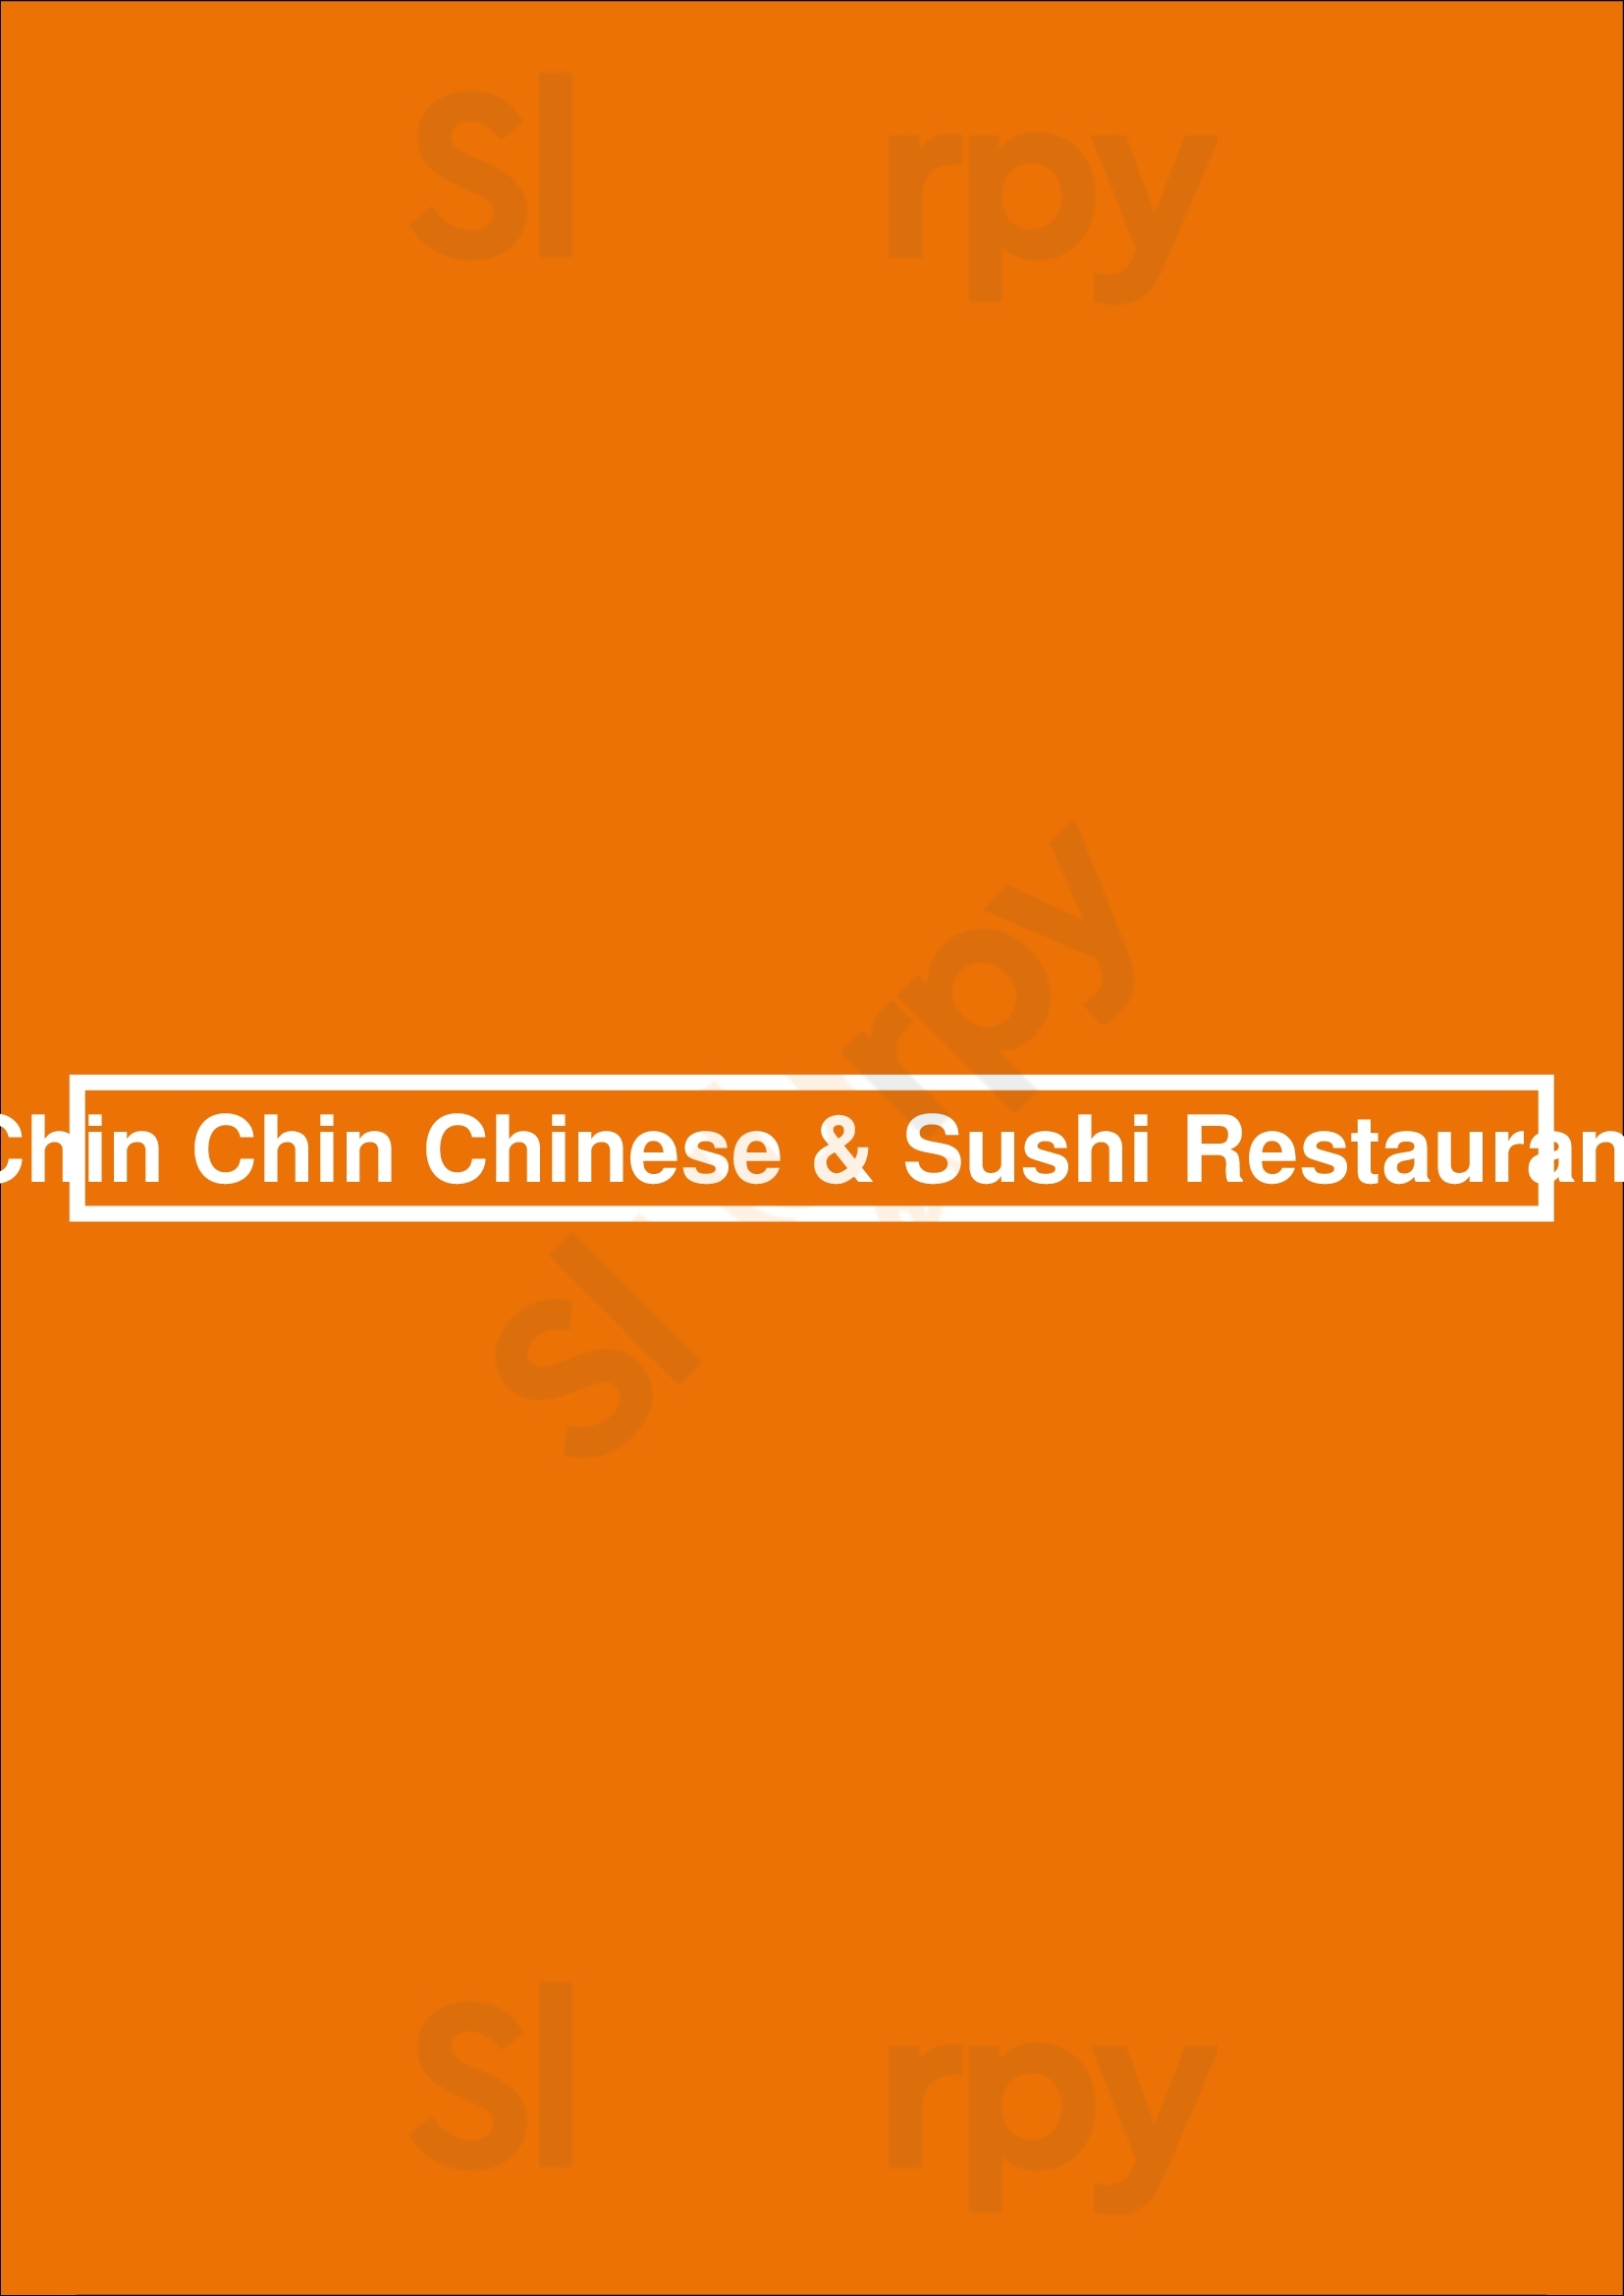 Chin Chin Chinese & Sushi Restaurant Atlanta Menu - 1